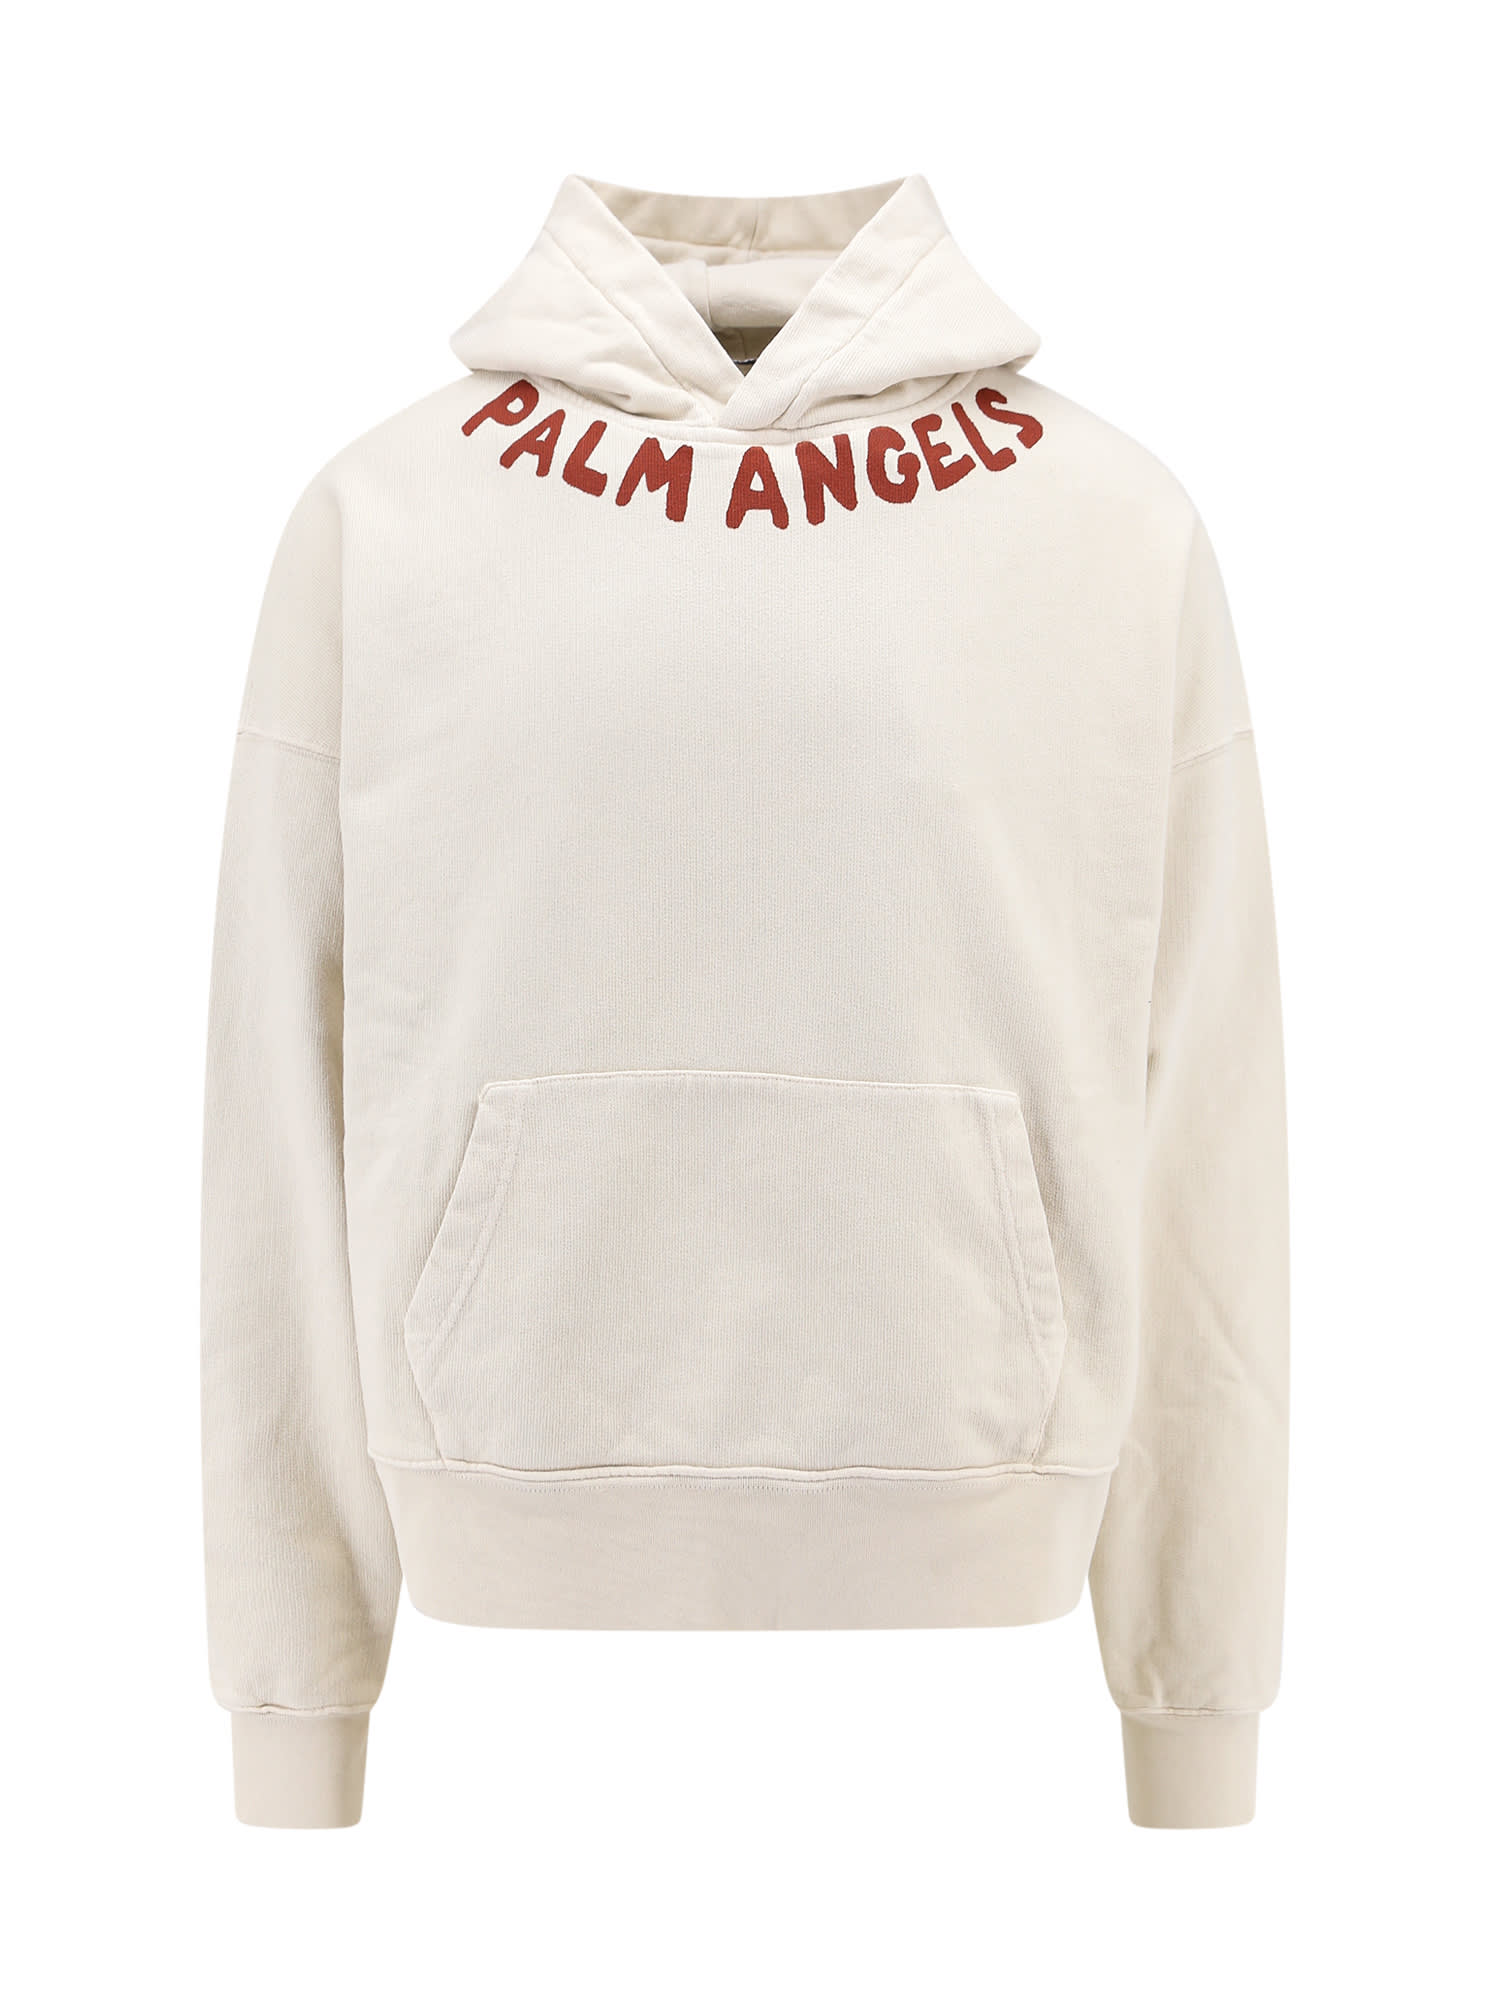 Palm Angels Sweatshirt